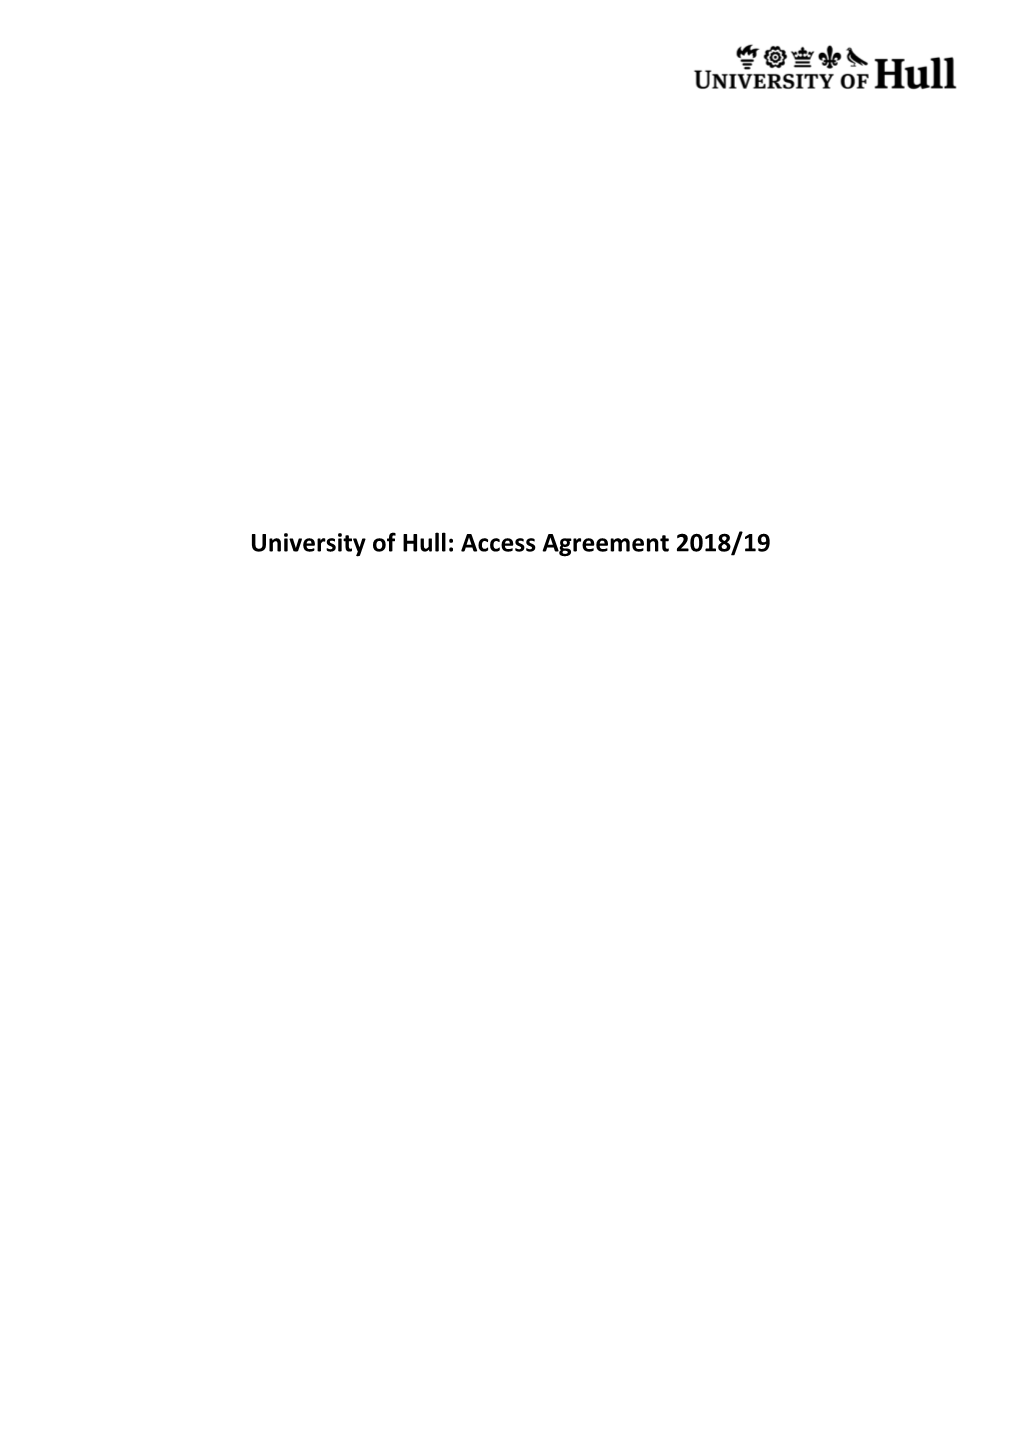 Access Agreement 2018-19